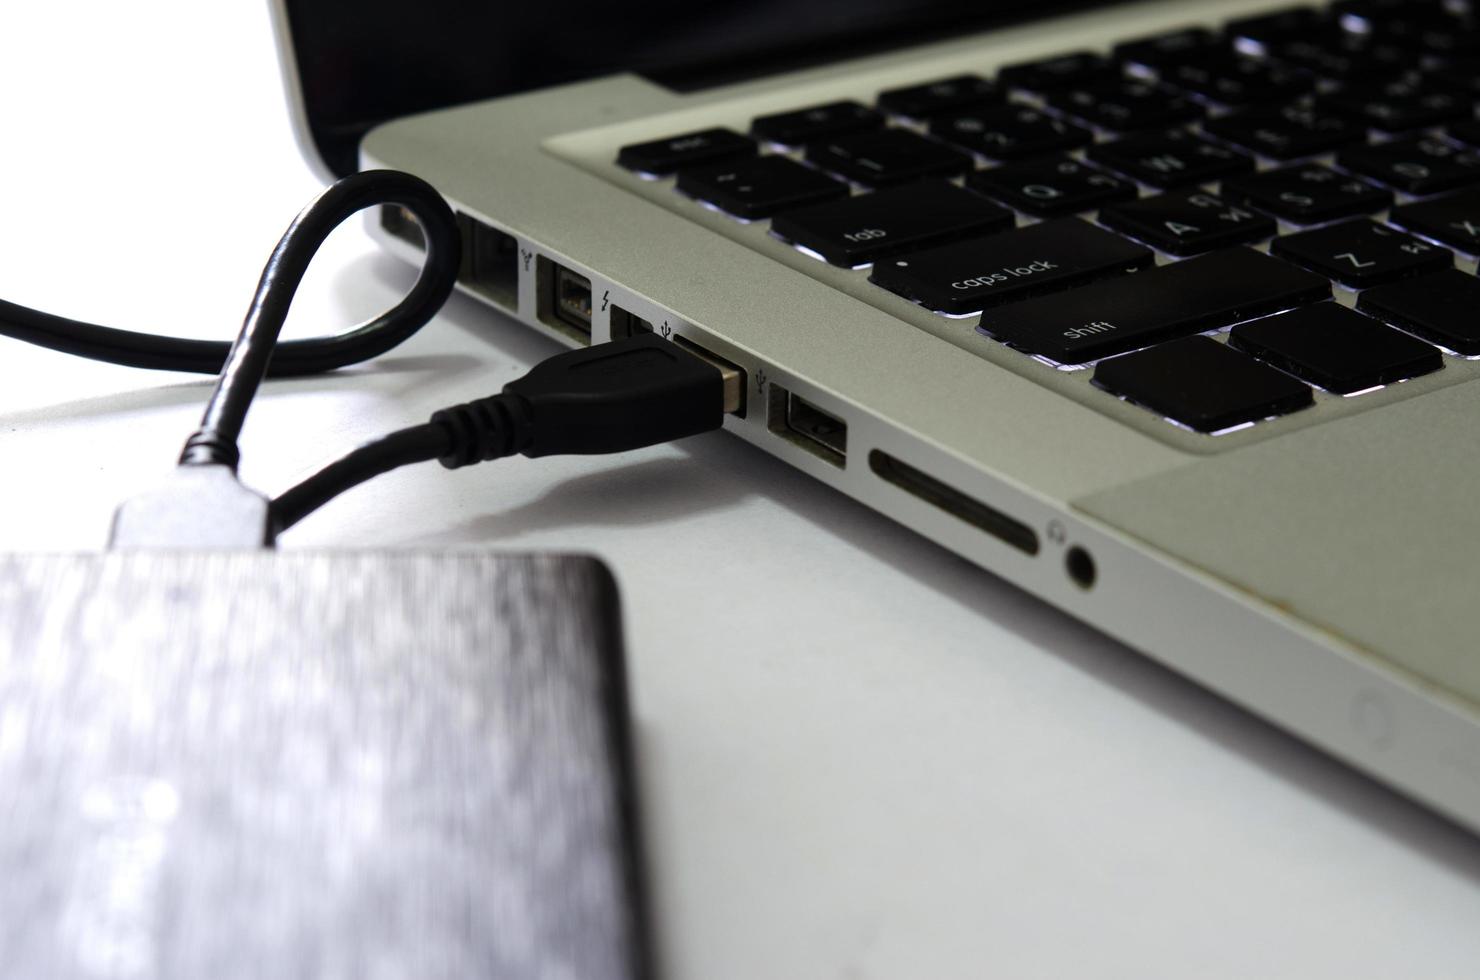 External hard drive plugged into USB port photo